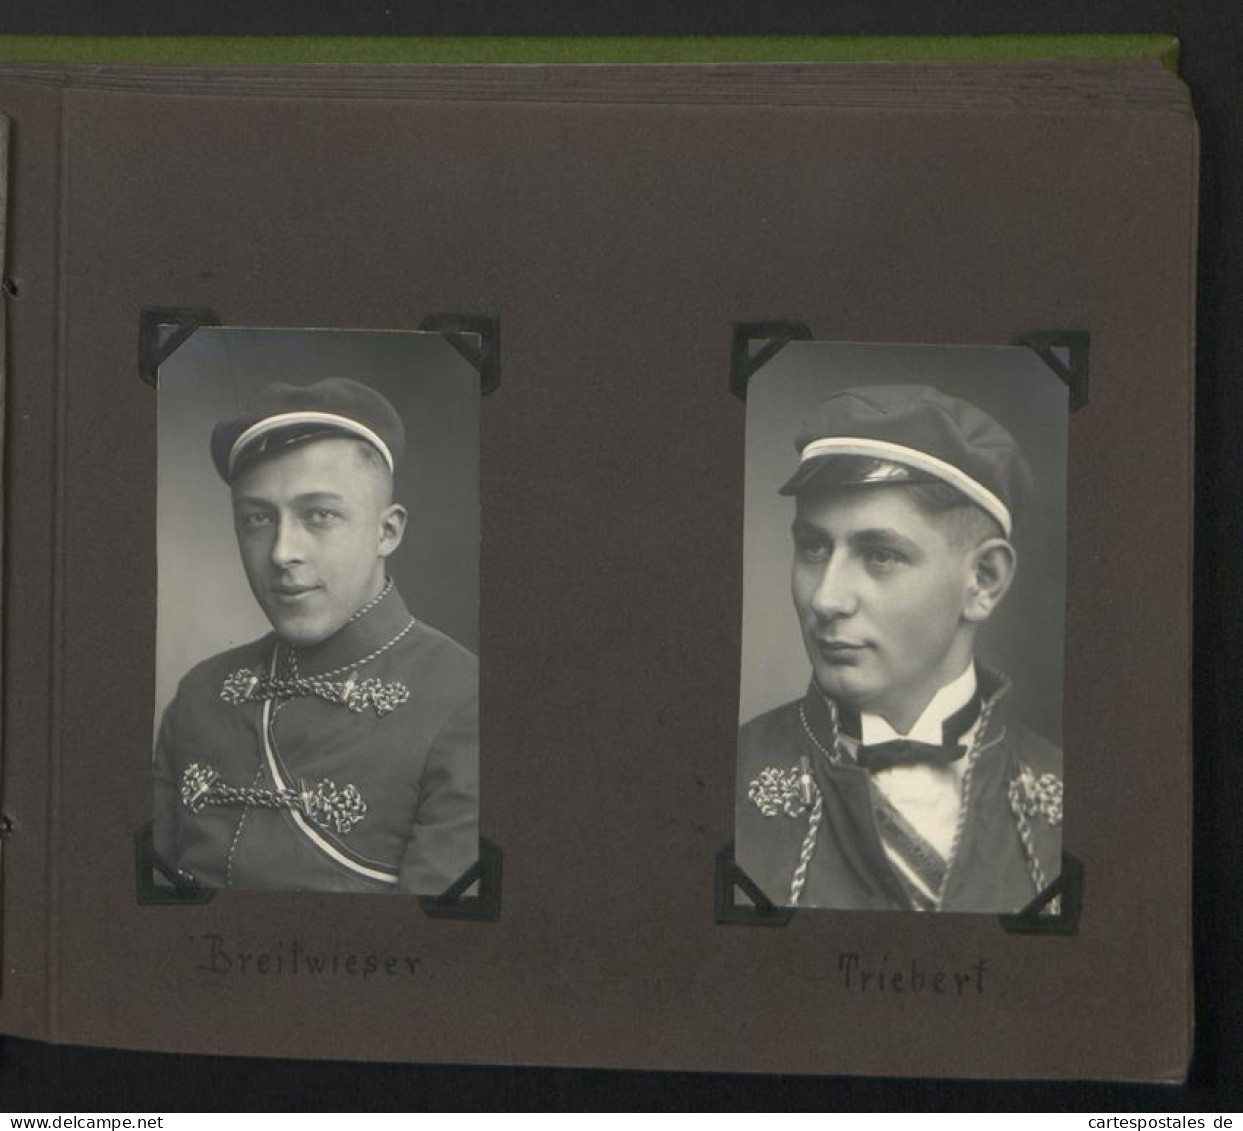 Fotoalbum Mit 150 Fotografien, Giessen Studenten, Theater, Militär, Soldaten, Fussball, Wappen  - Albums & Collections